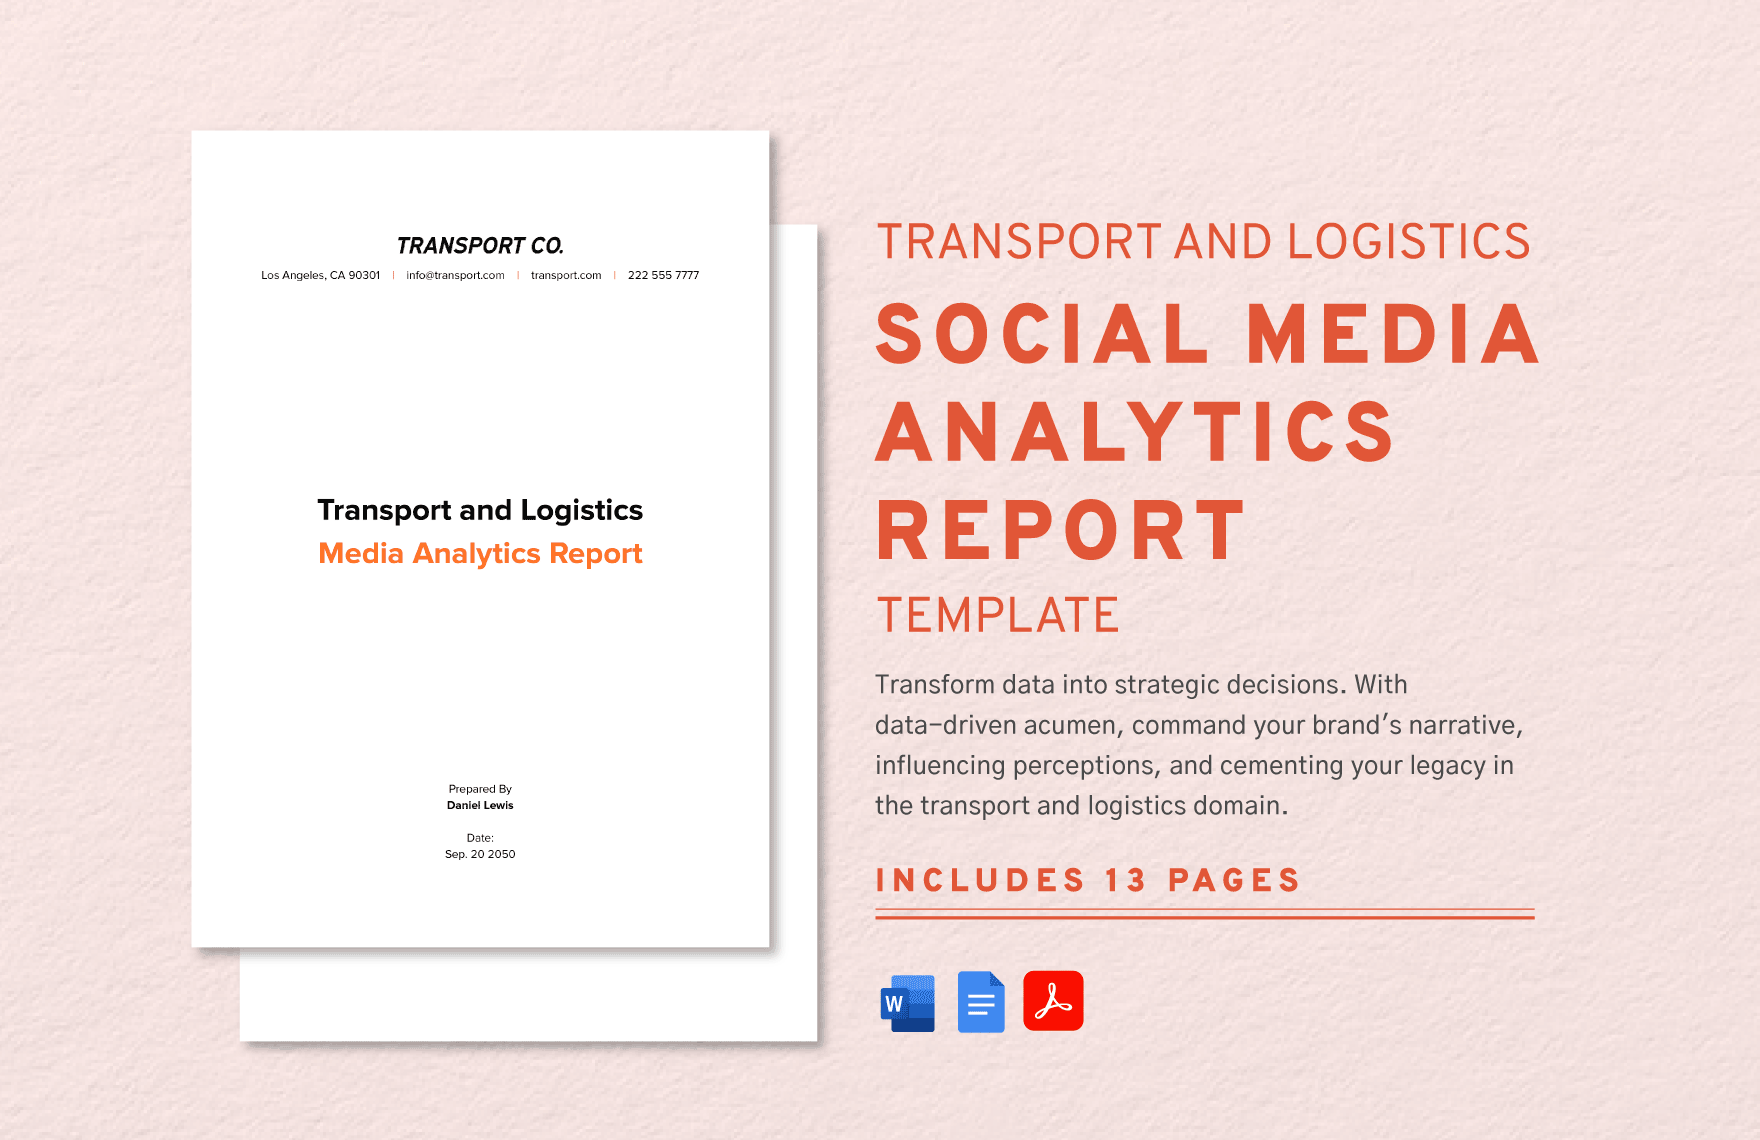 Transport and Logistics Social Media Analytics Report Template